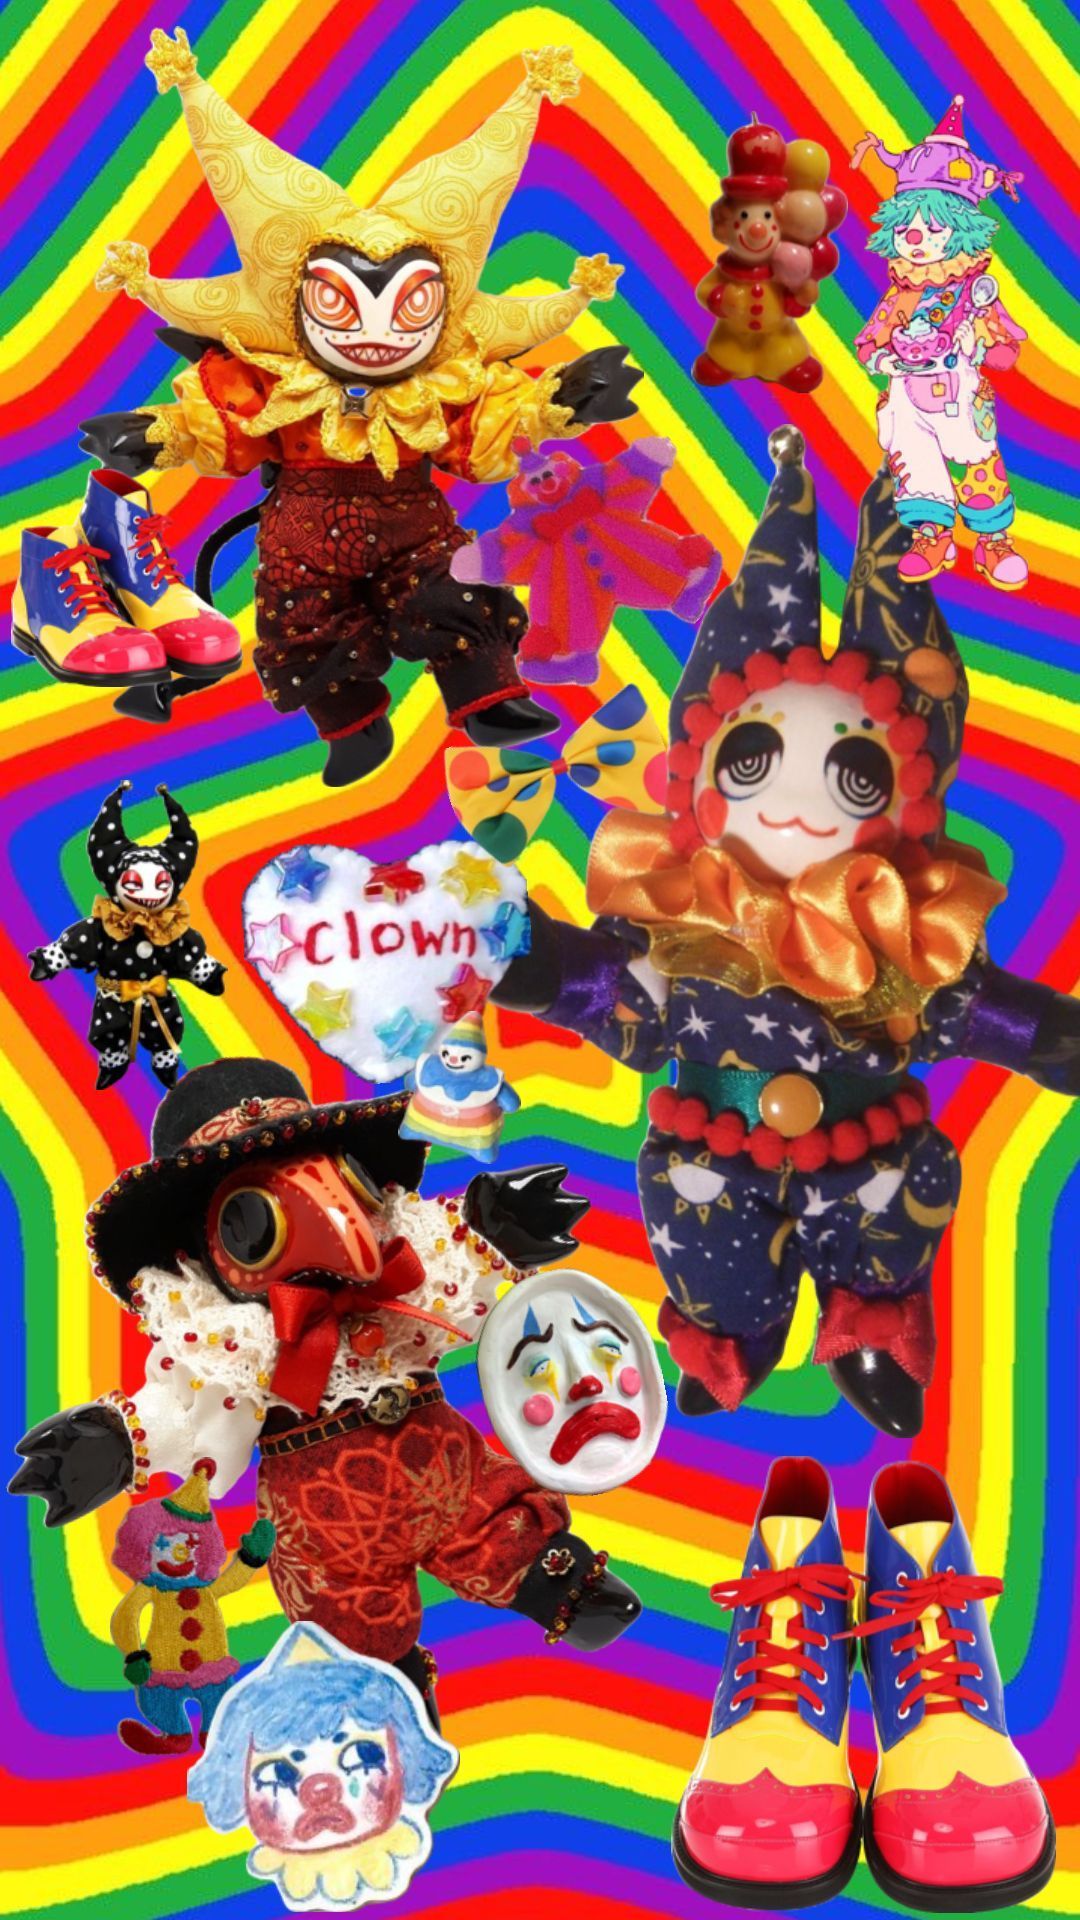 Clowns and toys on a rainbow background - Clown